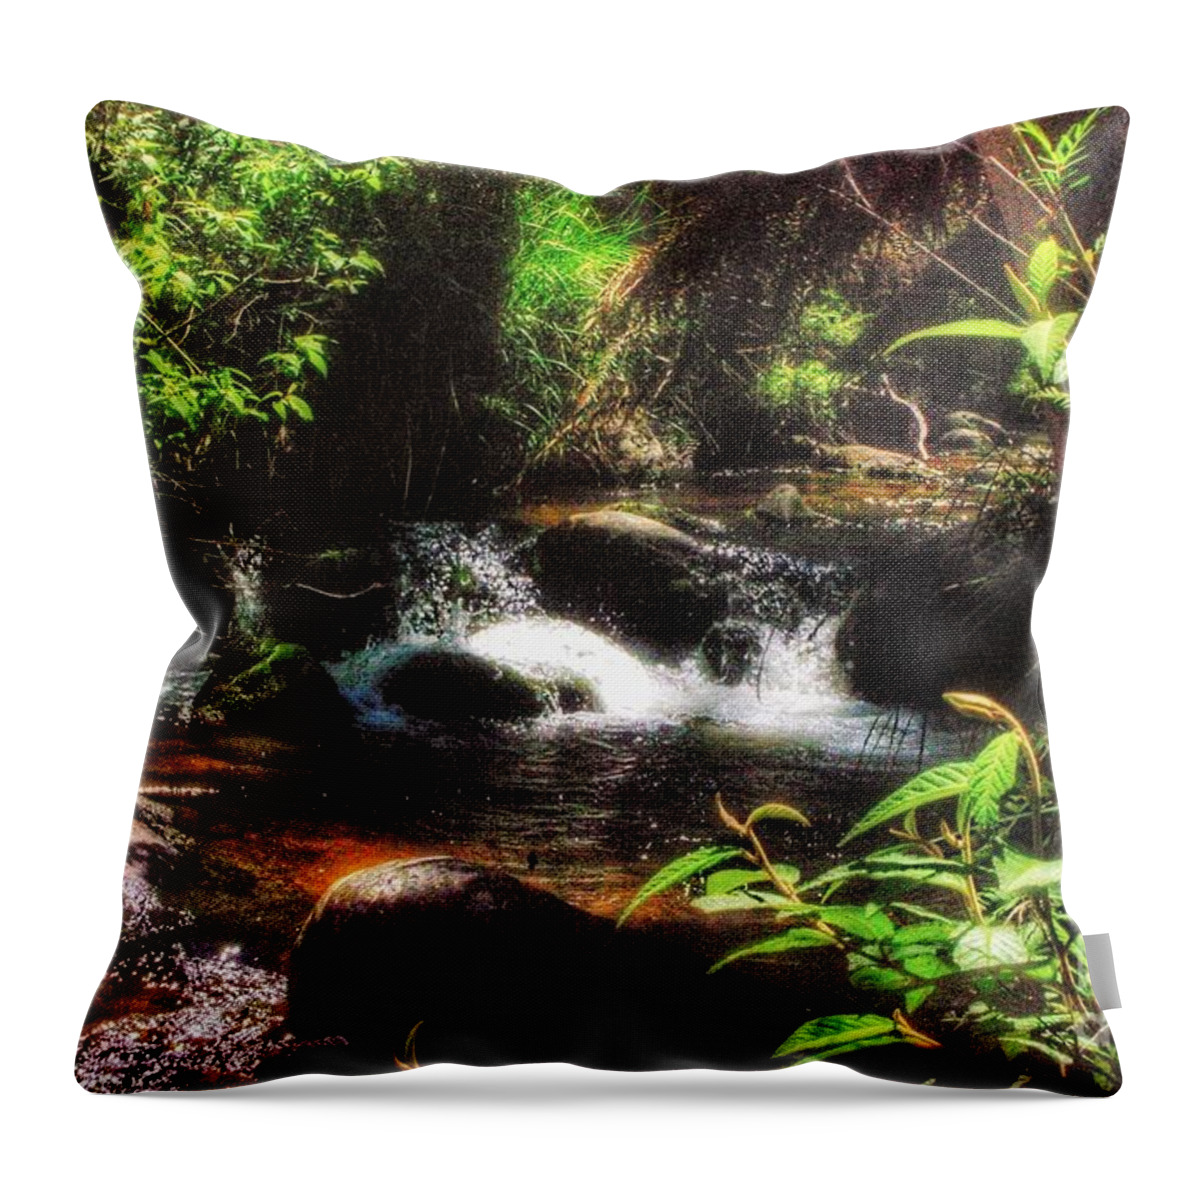 Mountain Stream Throw Pillow featuring the photograph Mountain Stream #1 by Blair Stuart